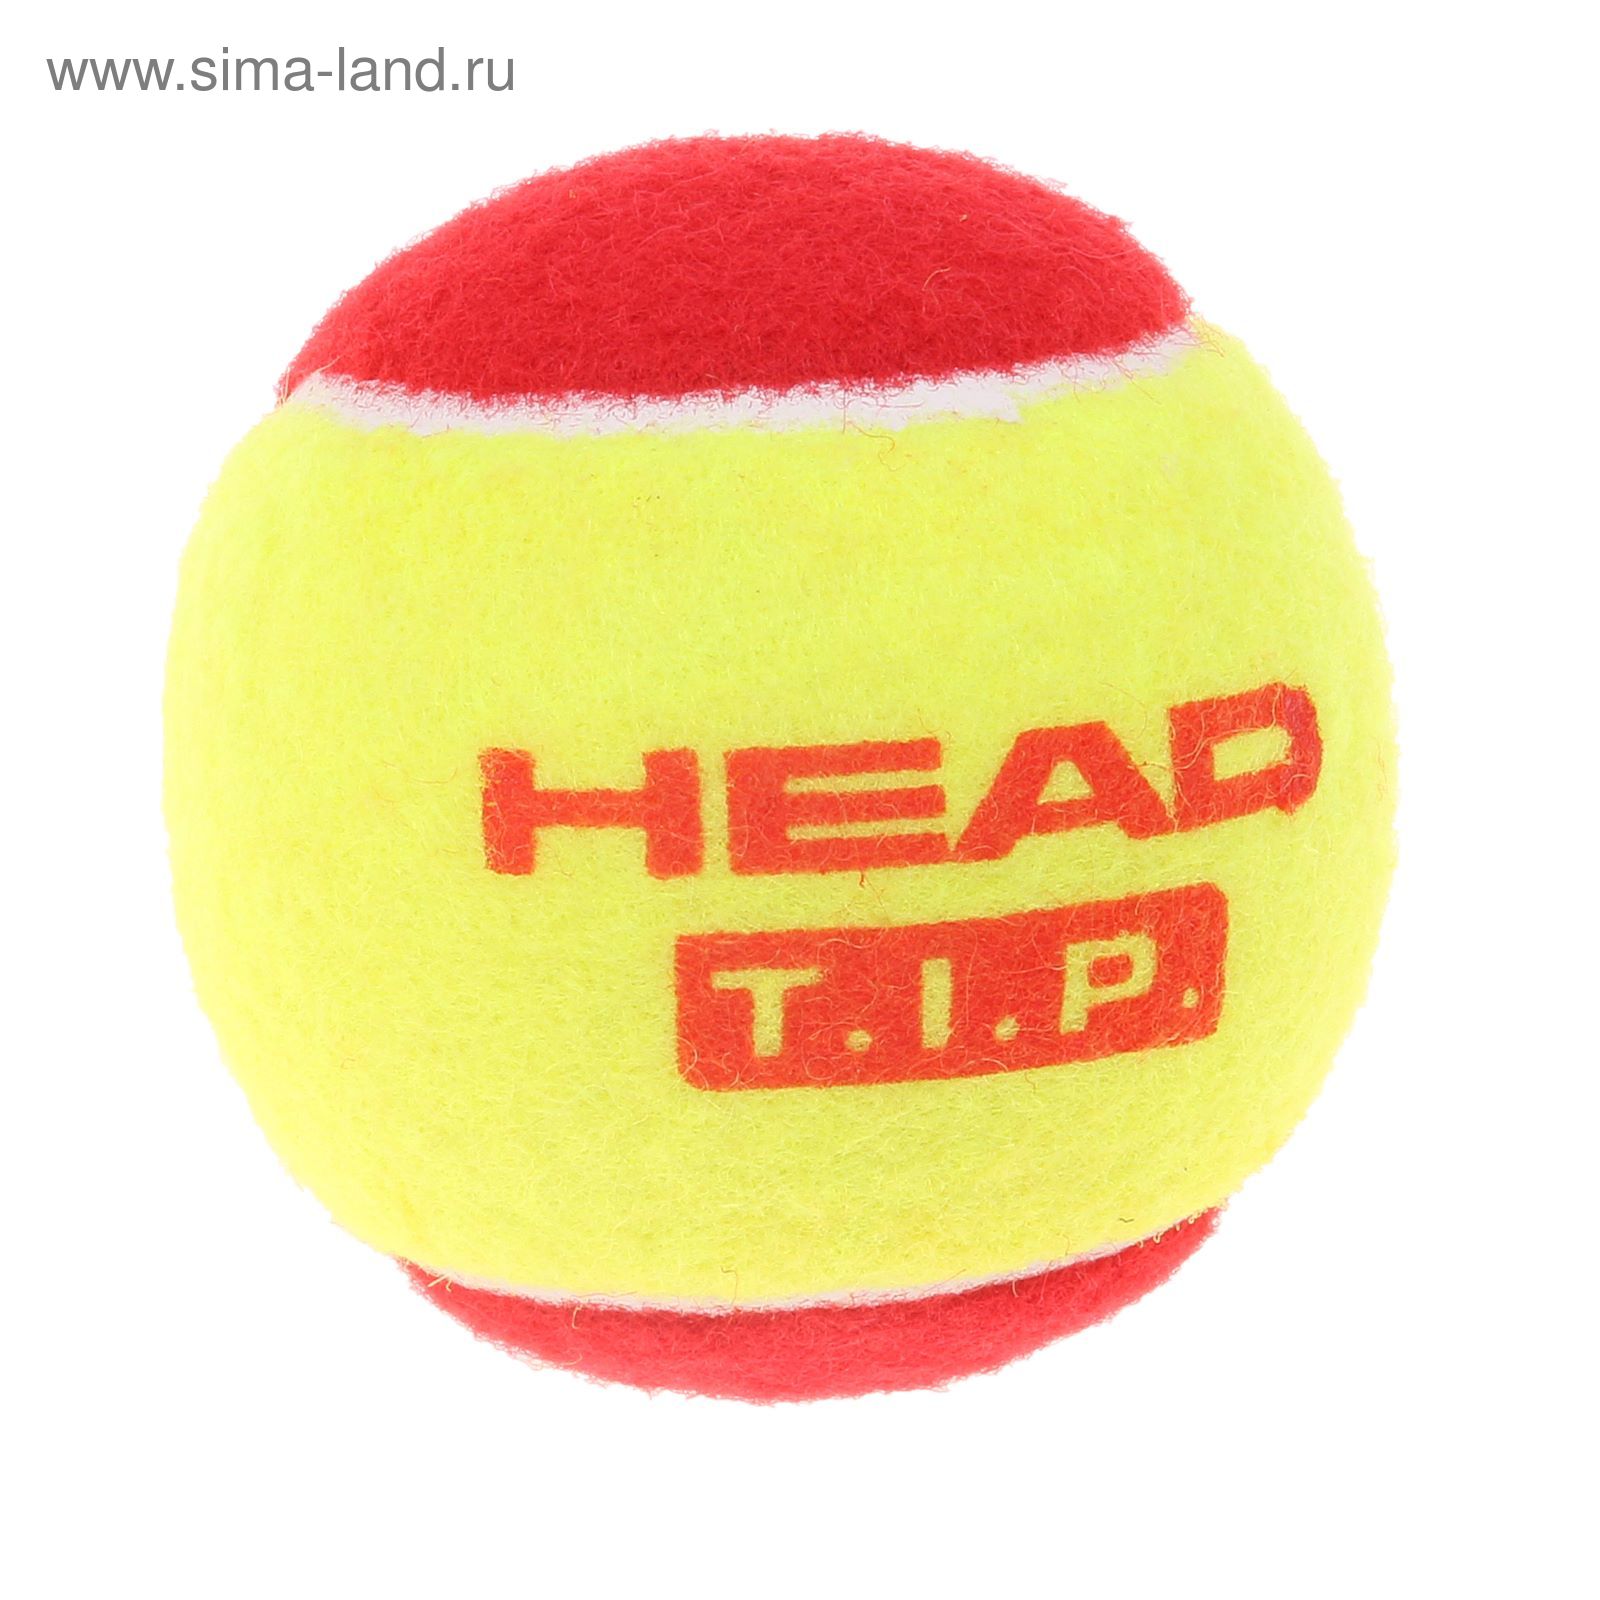 Мяч теннисный Head T.I.P Red, набор 3 штуки, фетр, натуральная резина